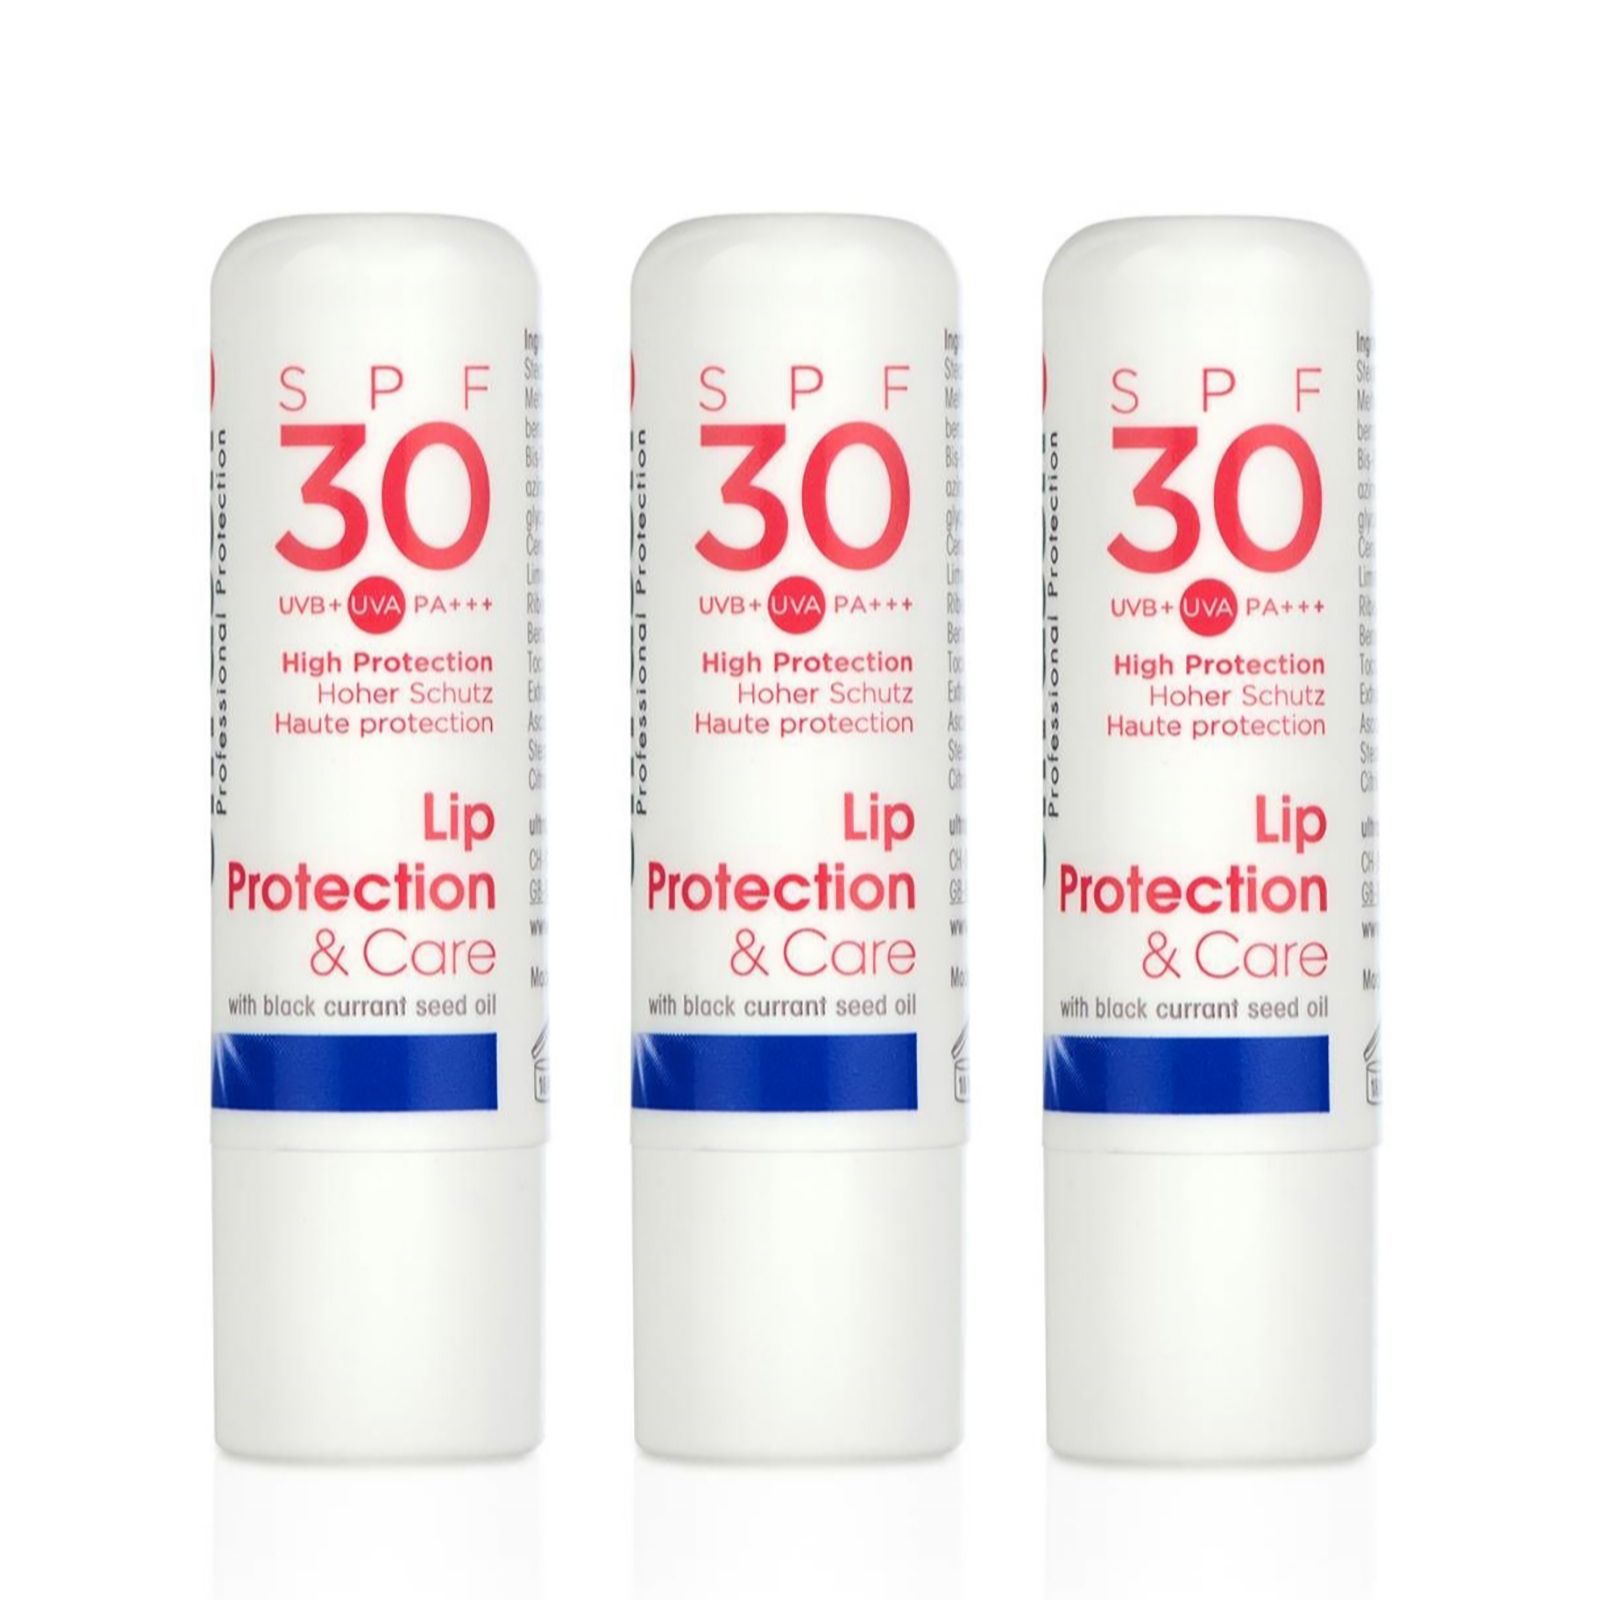 Ultrasun Sun Protection Lip SPF 30 Trio - QVC UK